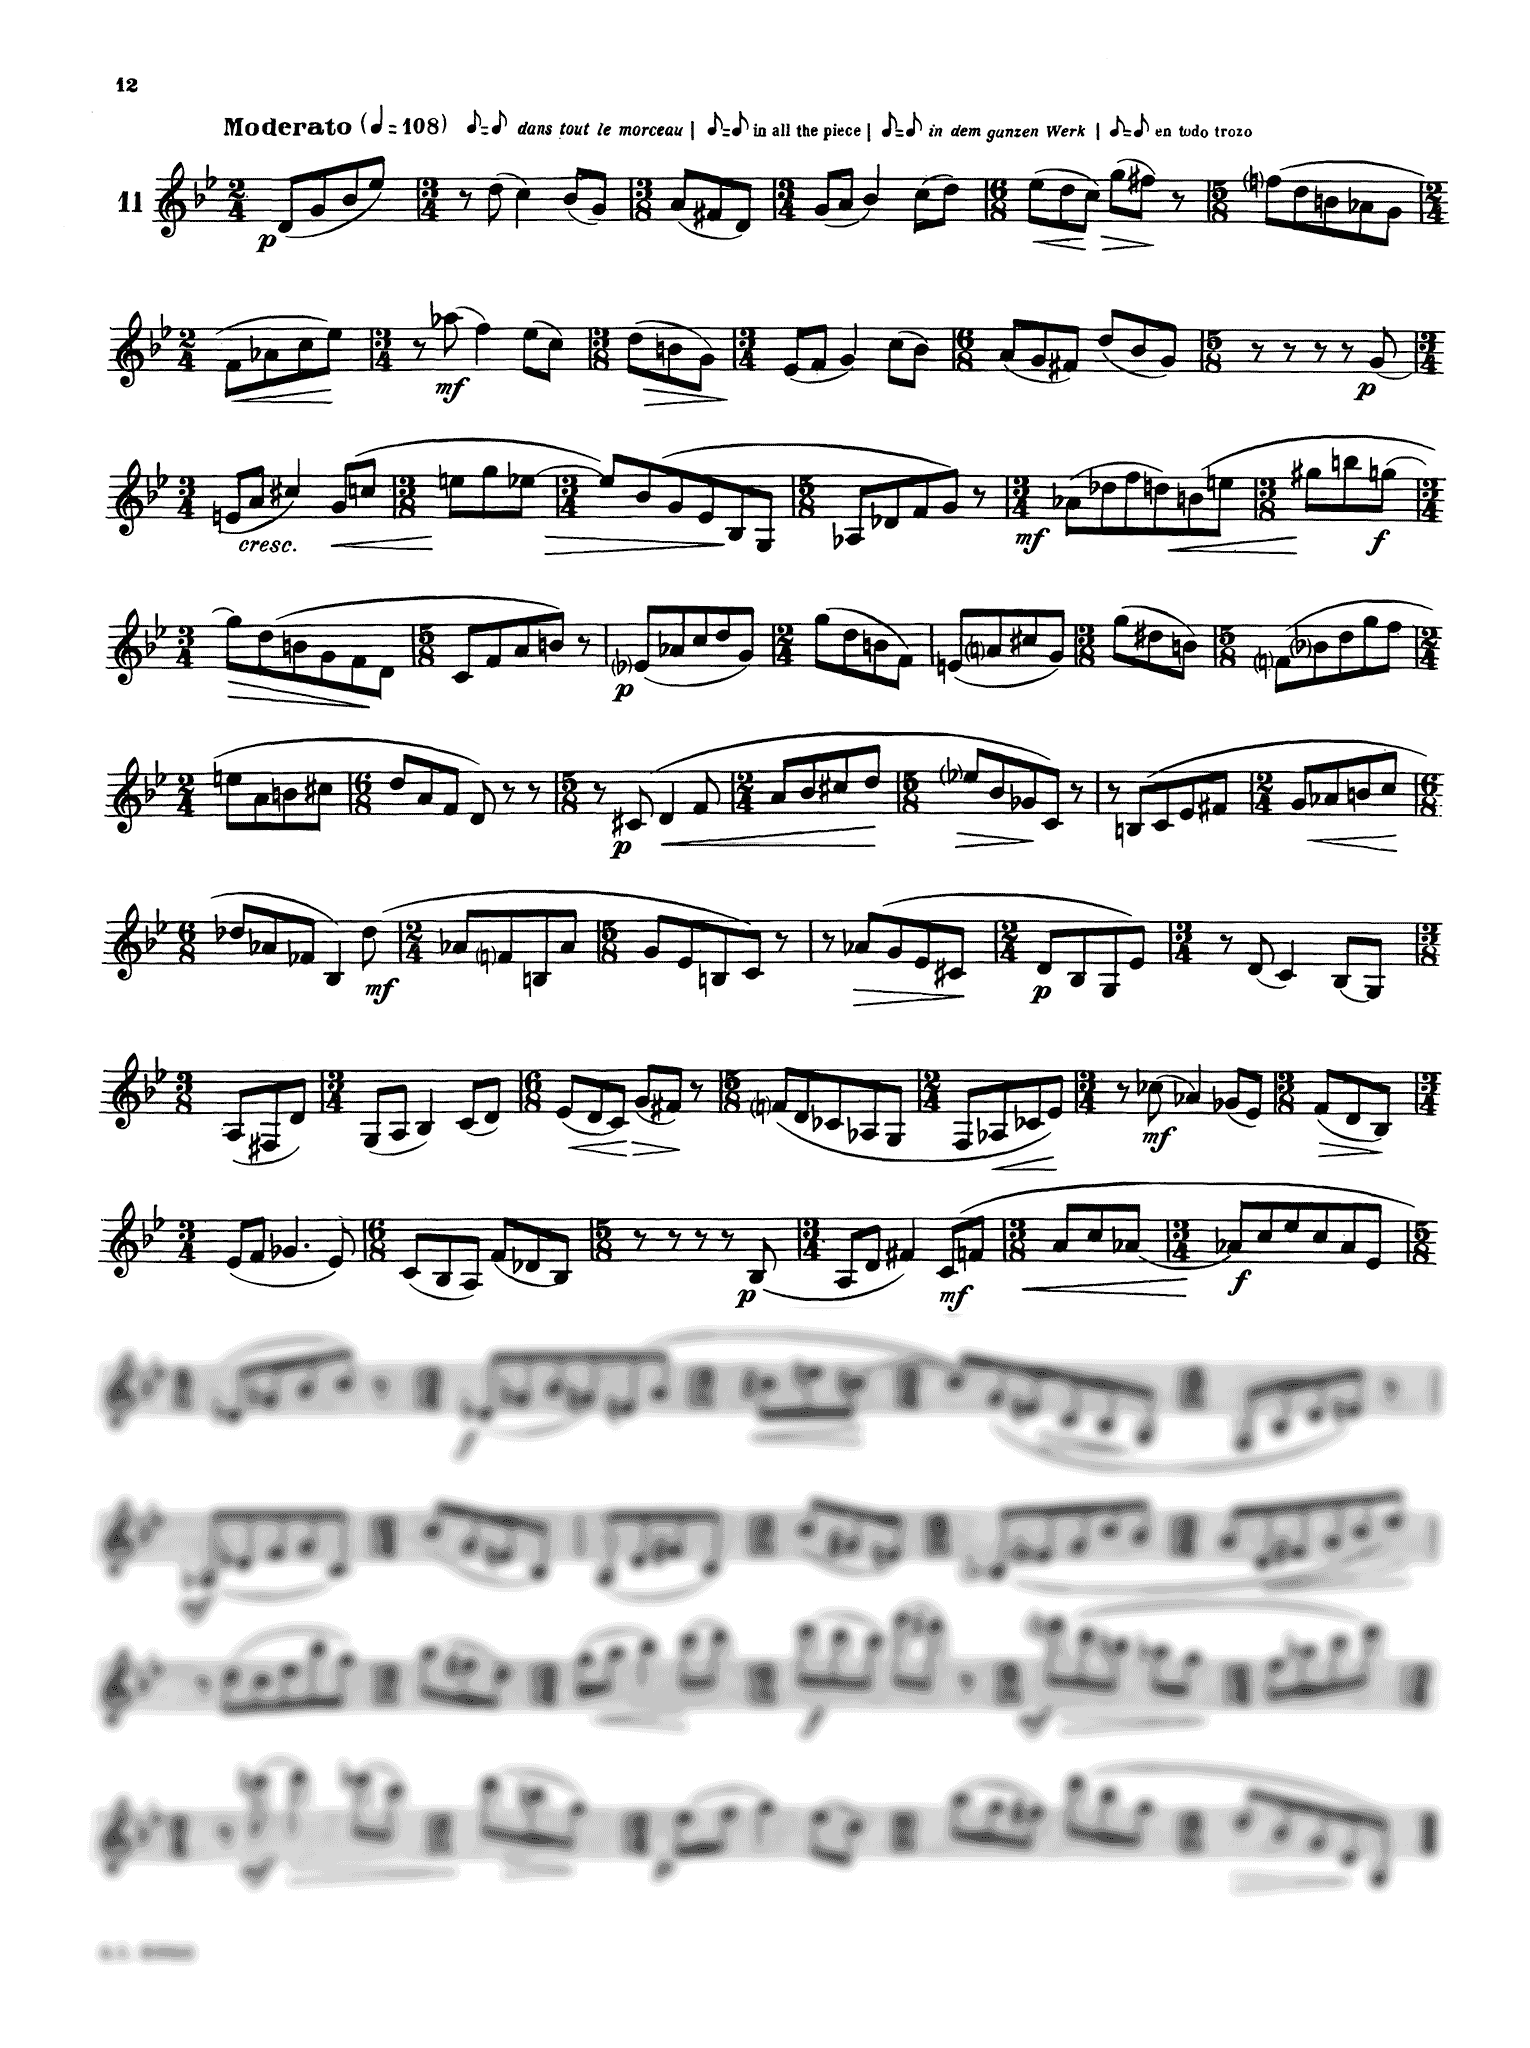 Marcel Bitsch 12 Études de rhythme for clarinet no. 11